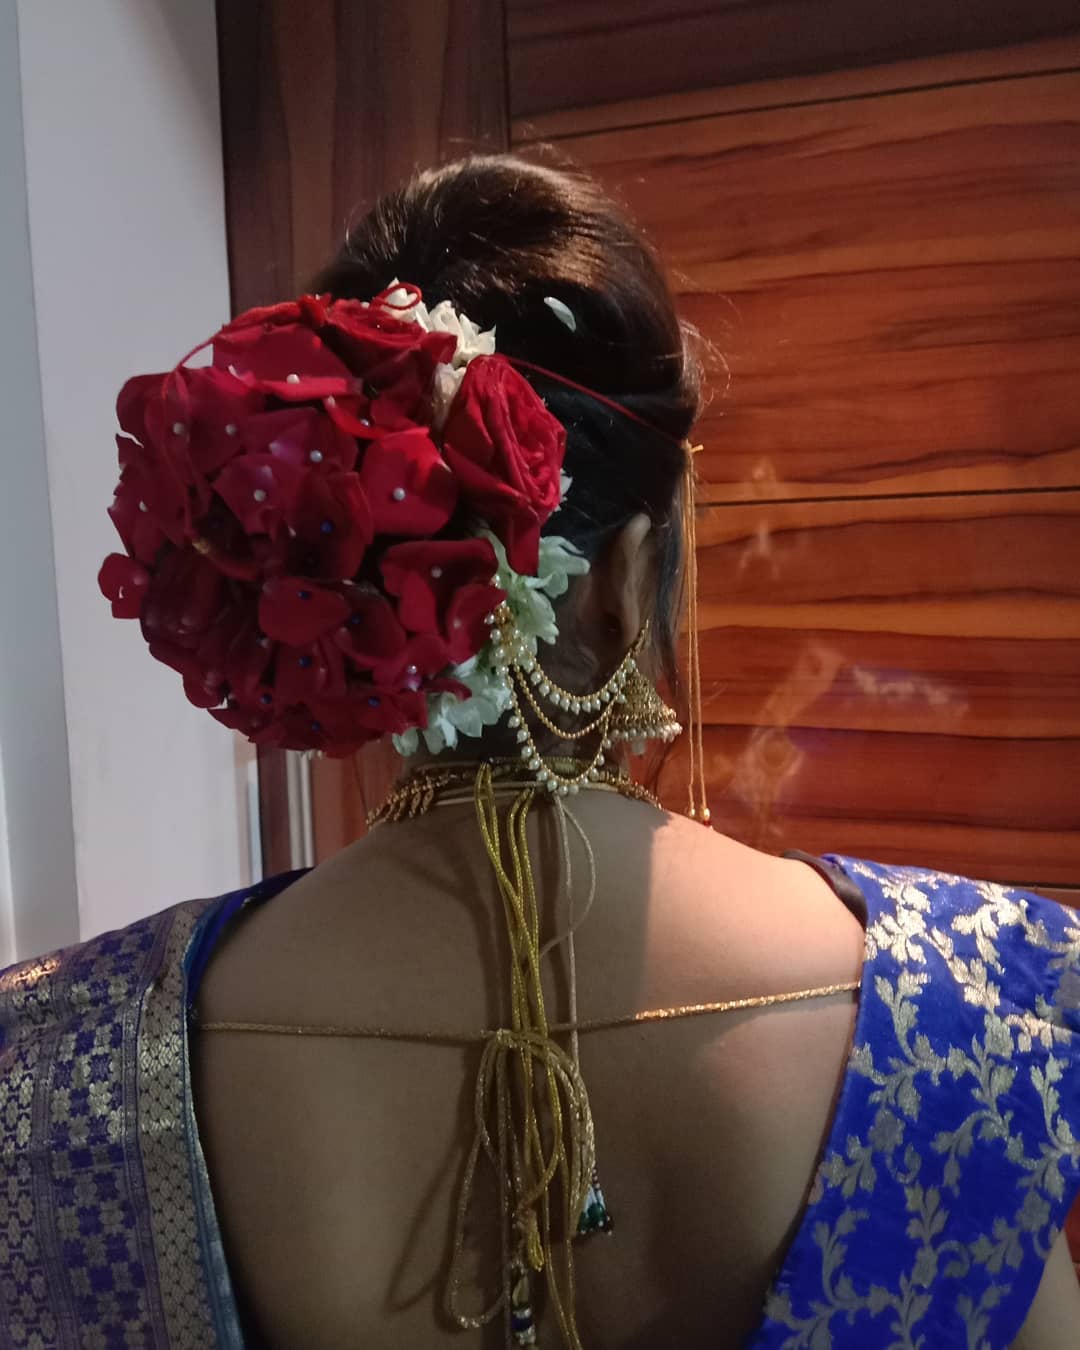 Marathi Bridal Hairstyle Top 10 Super Awesome Bridal Hairdos